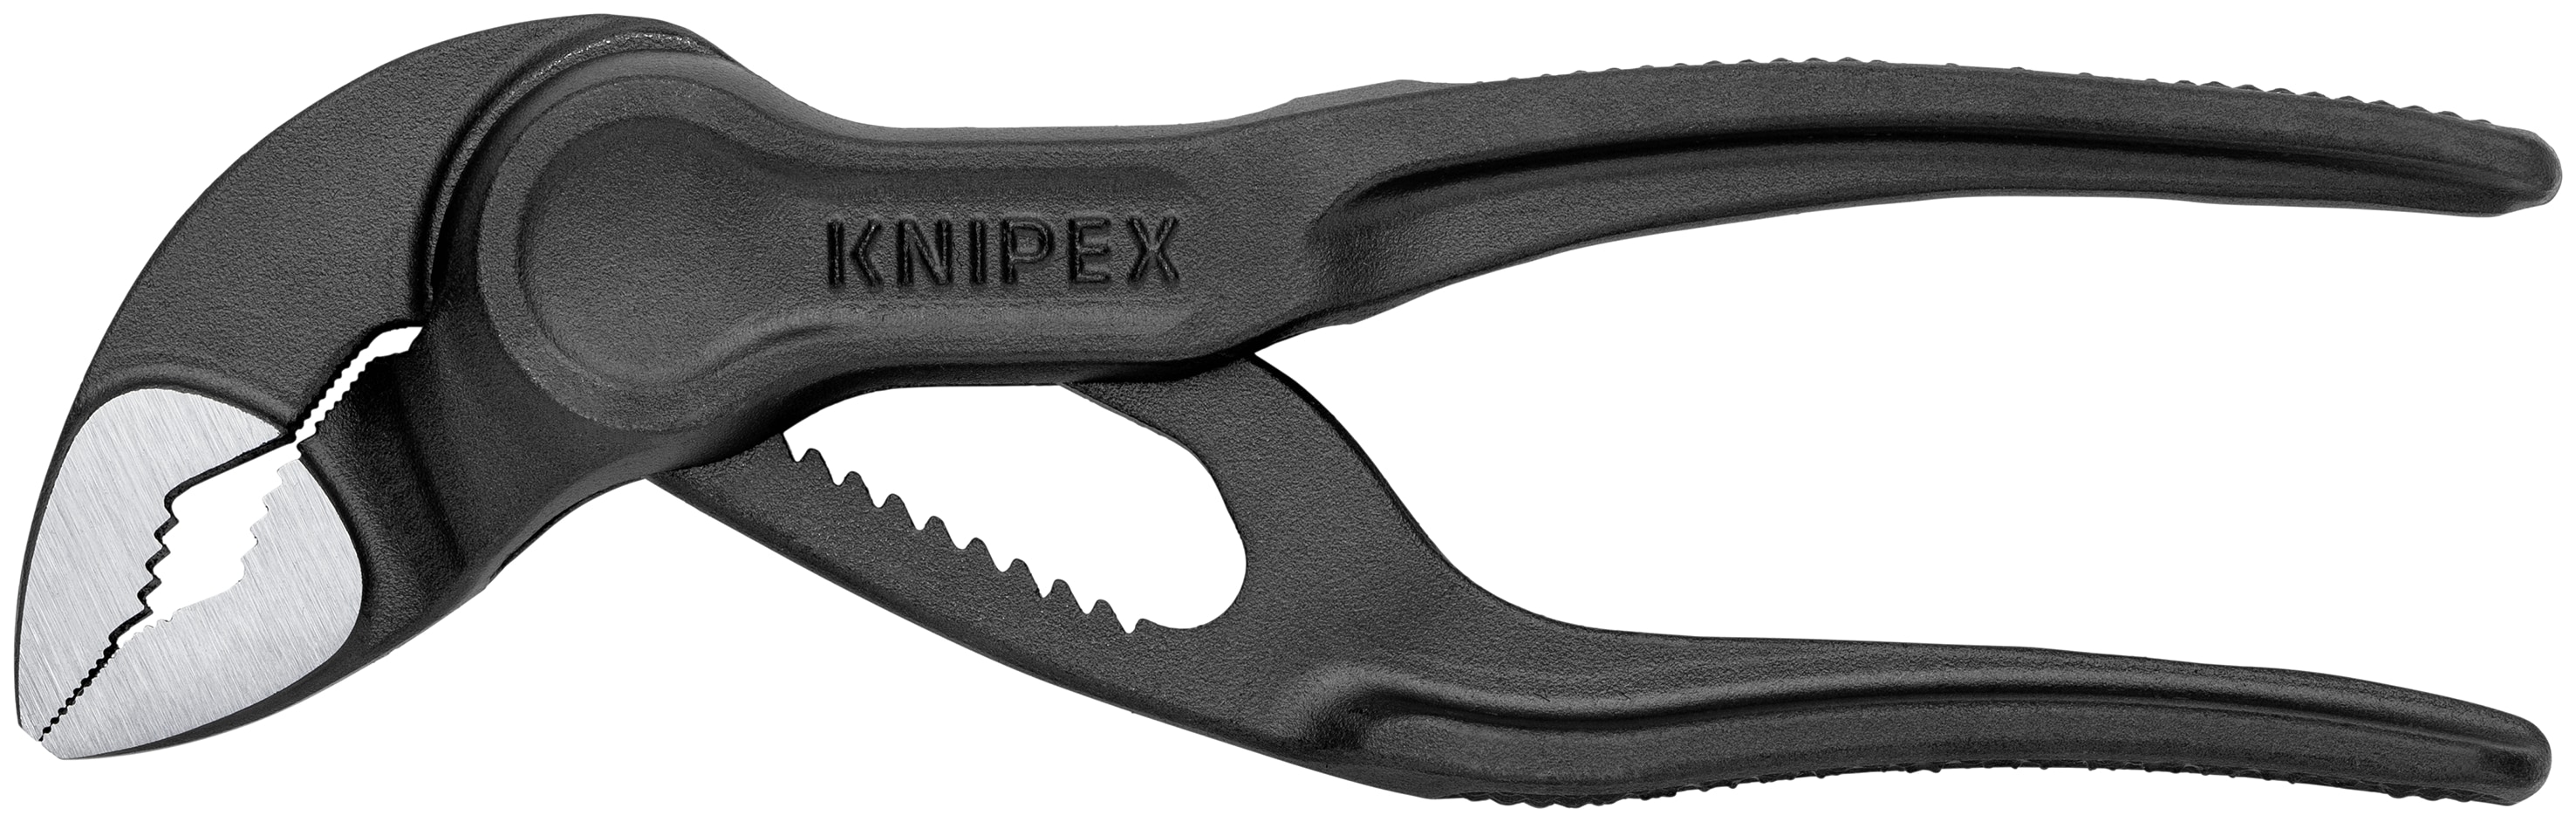 Knipex 9K 00 80 135 US Knipex Cobra Hose Clamp Pliers